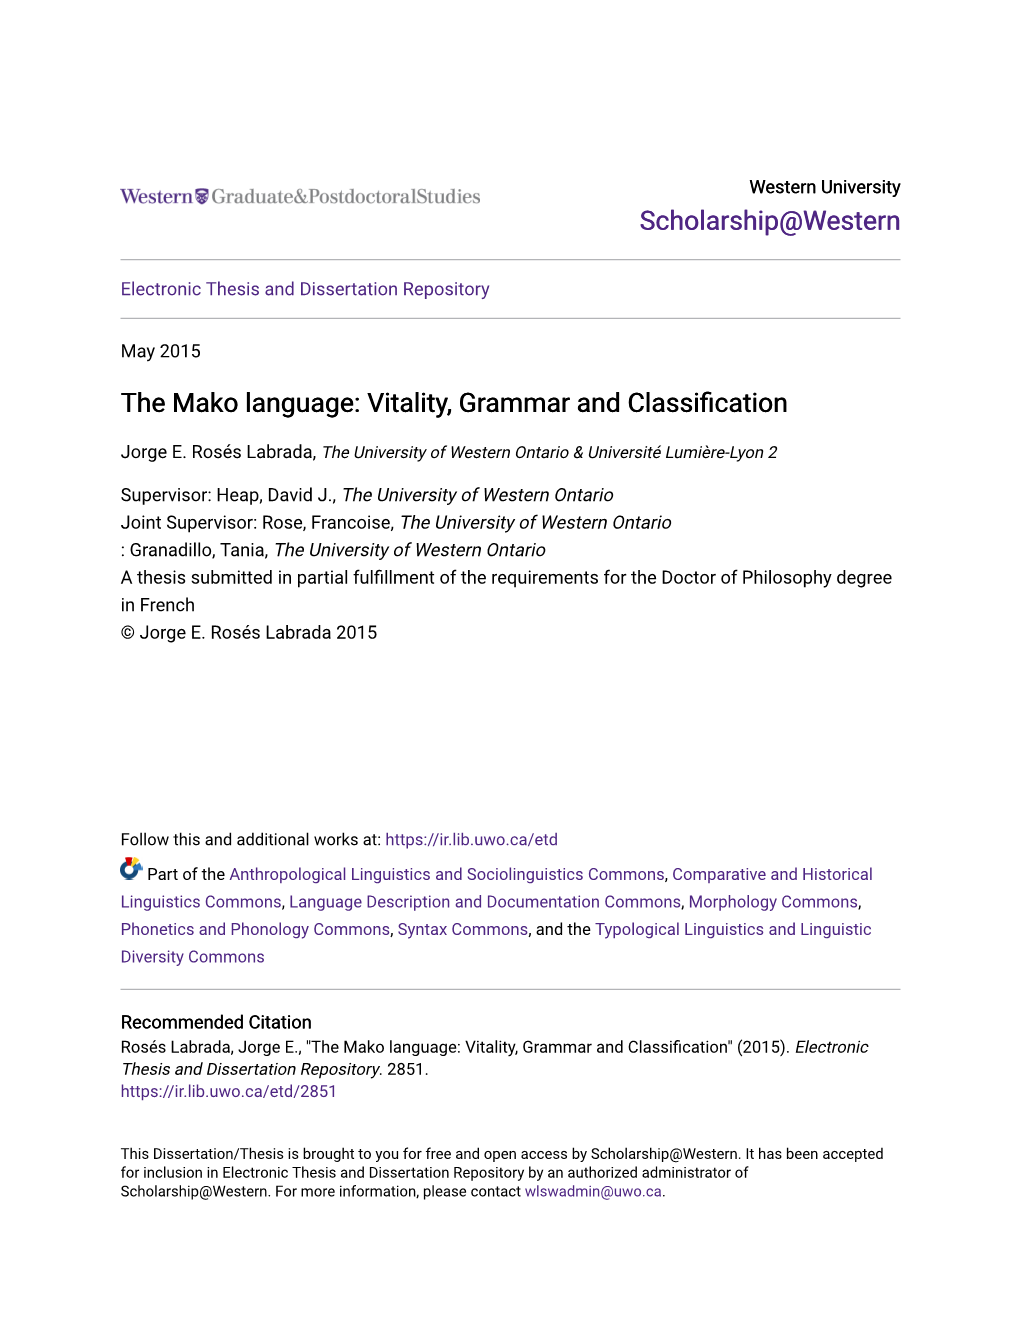 The Mako Language: Vitality, Grammar and Classification